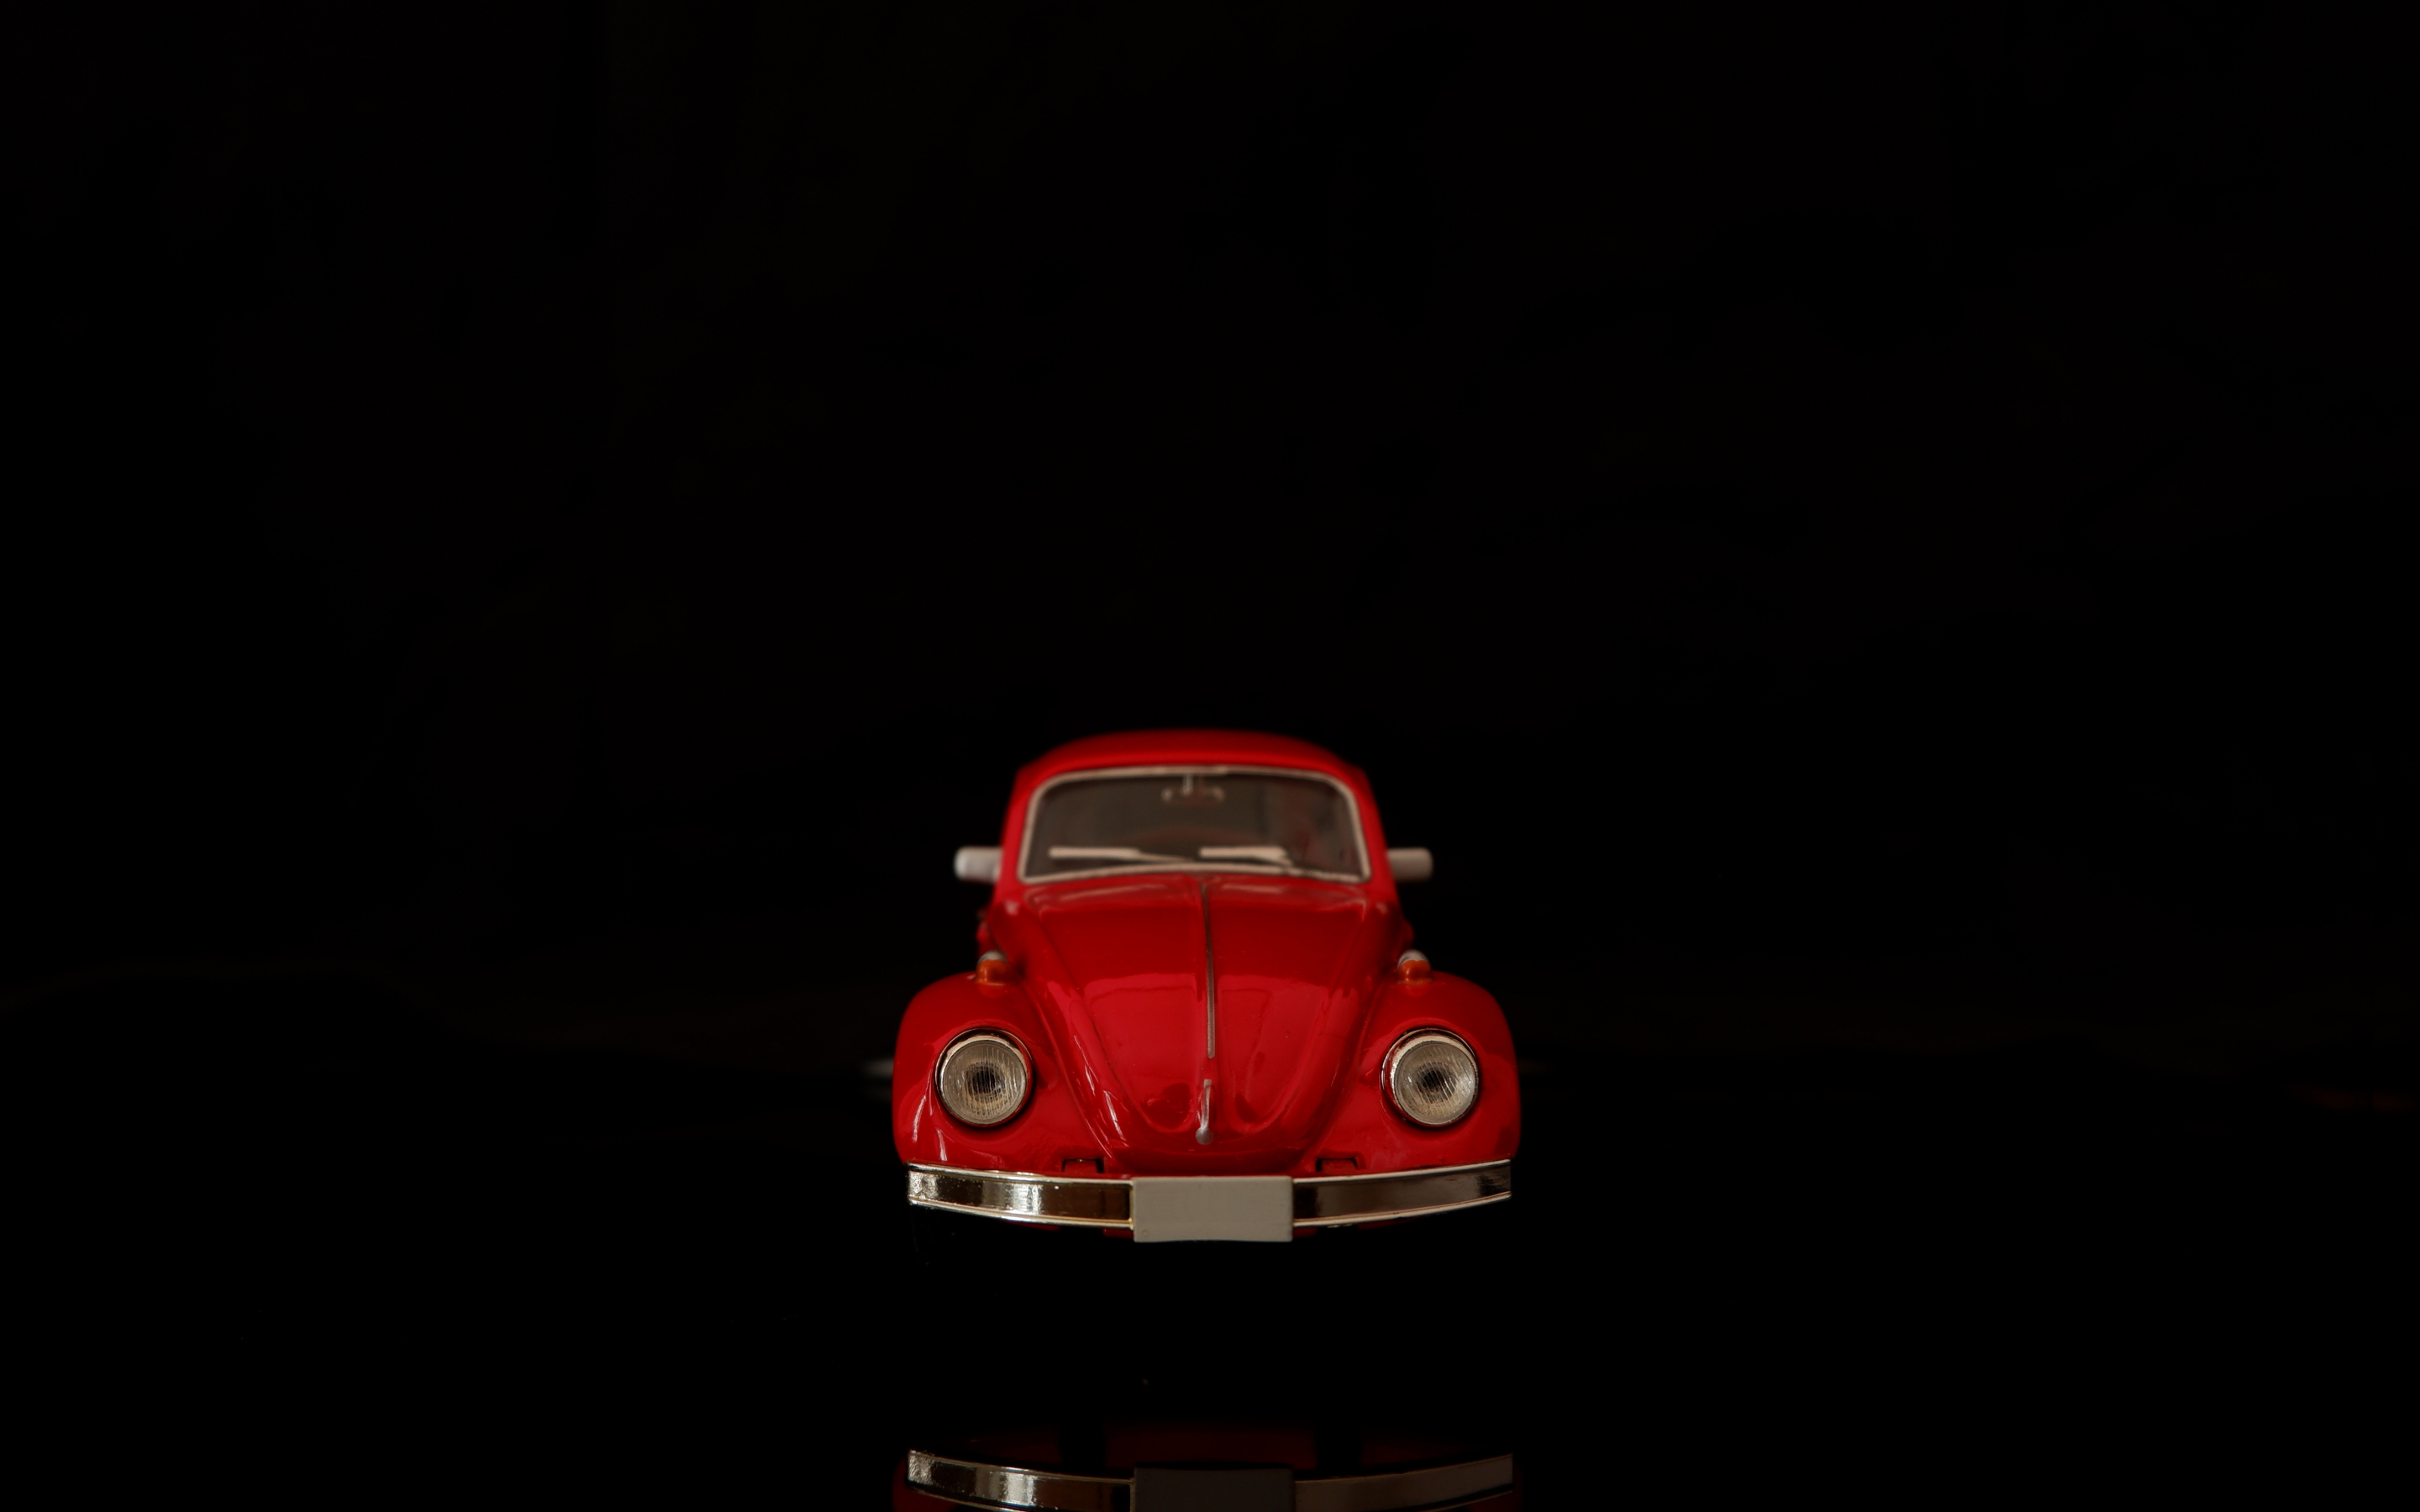 Retro, vintage car, model, figure, red car, 2880x1800 wallpaper